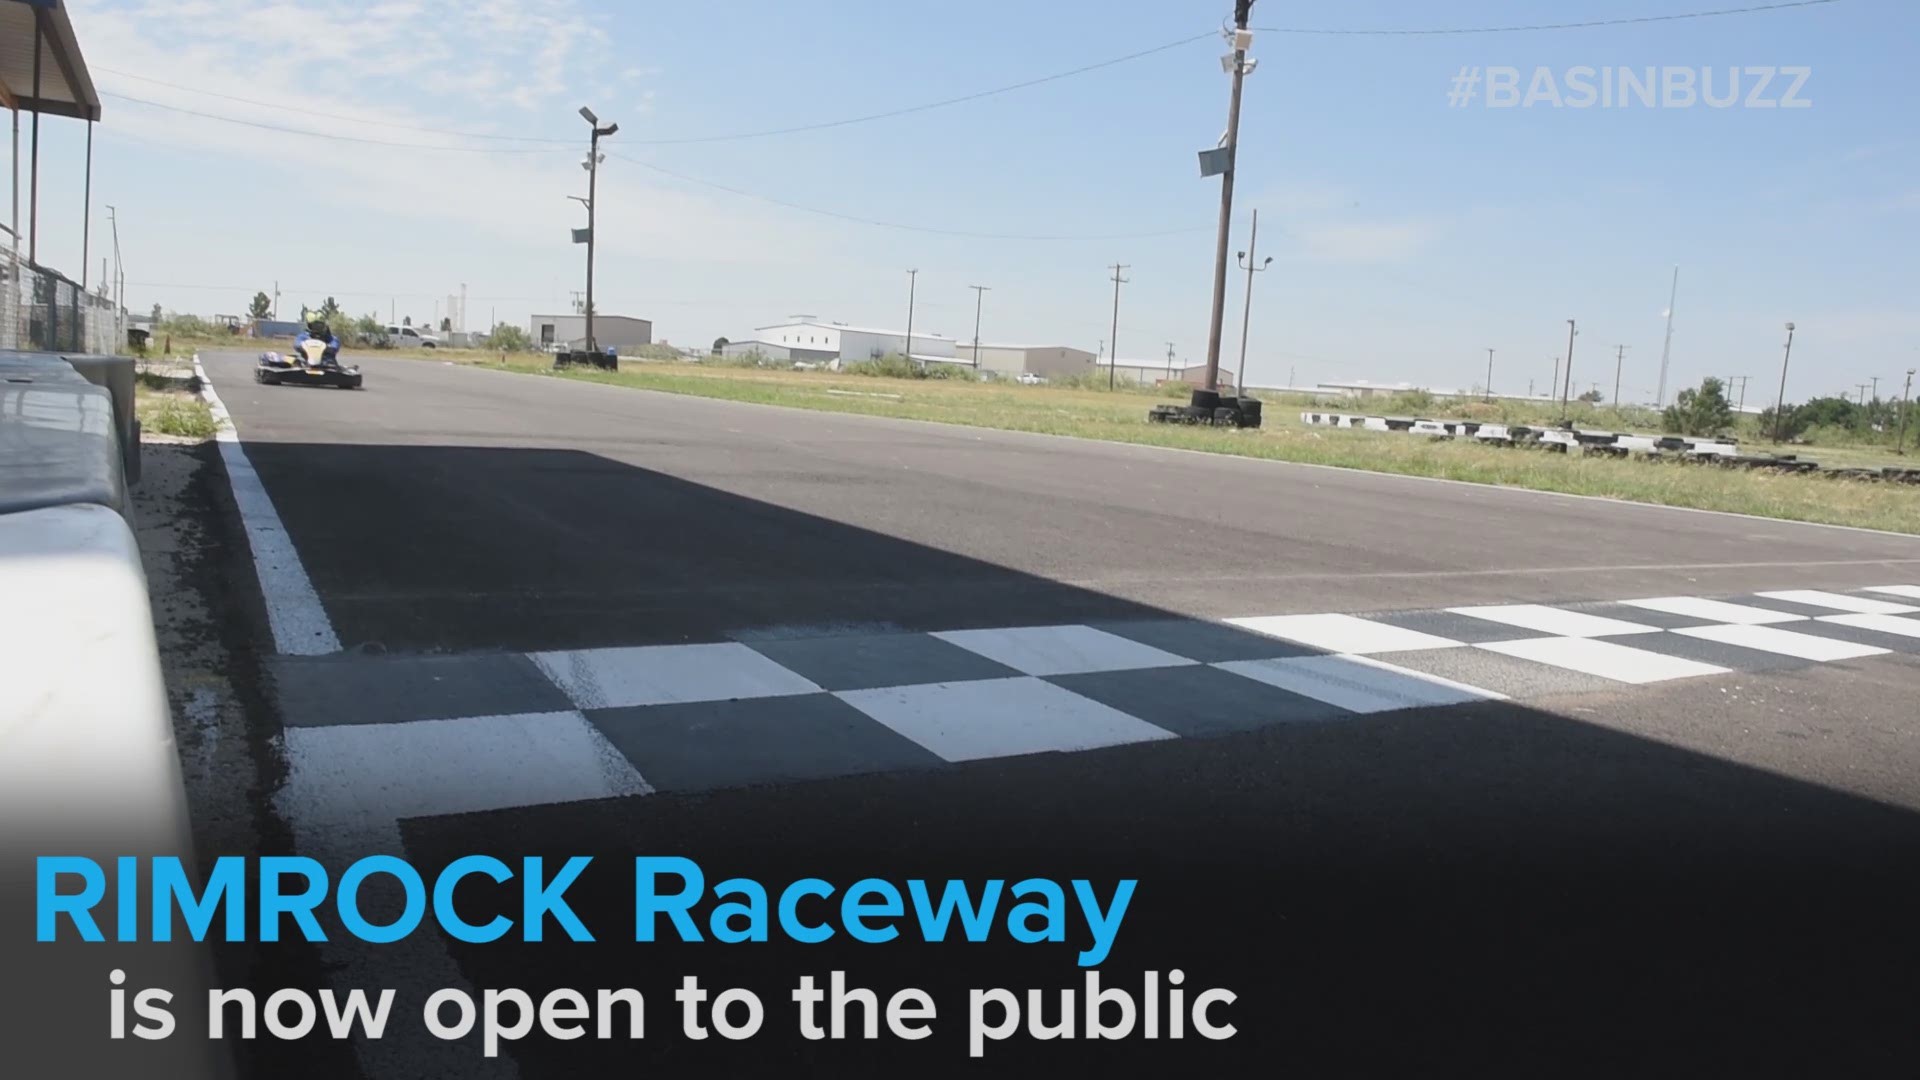 Basin Buzz races down Rimrock Raceway | newswest9.com